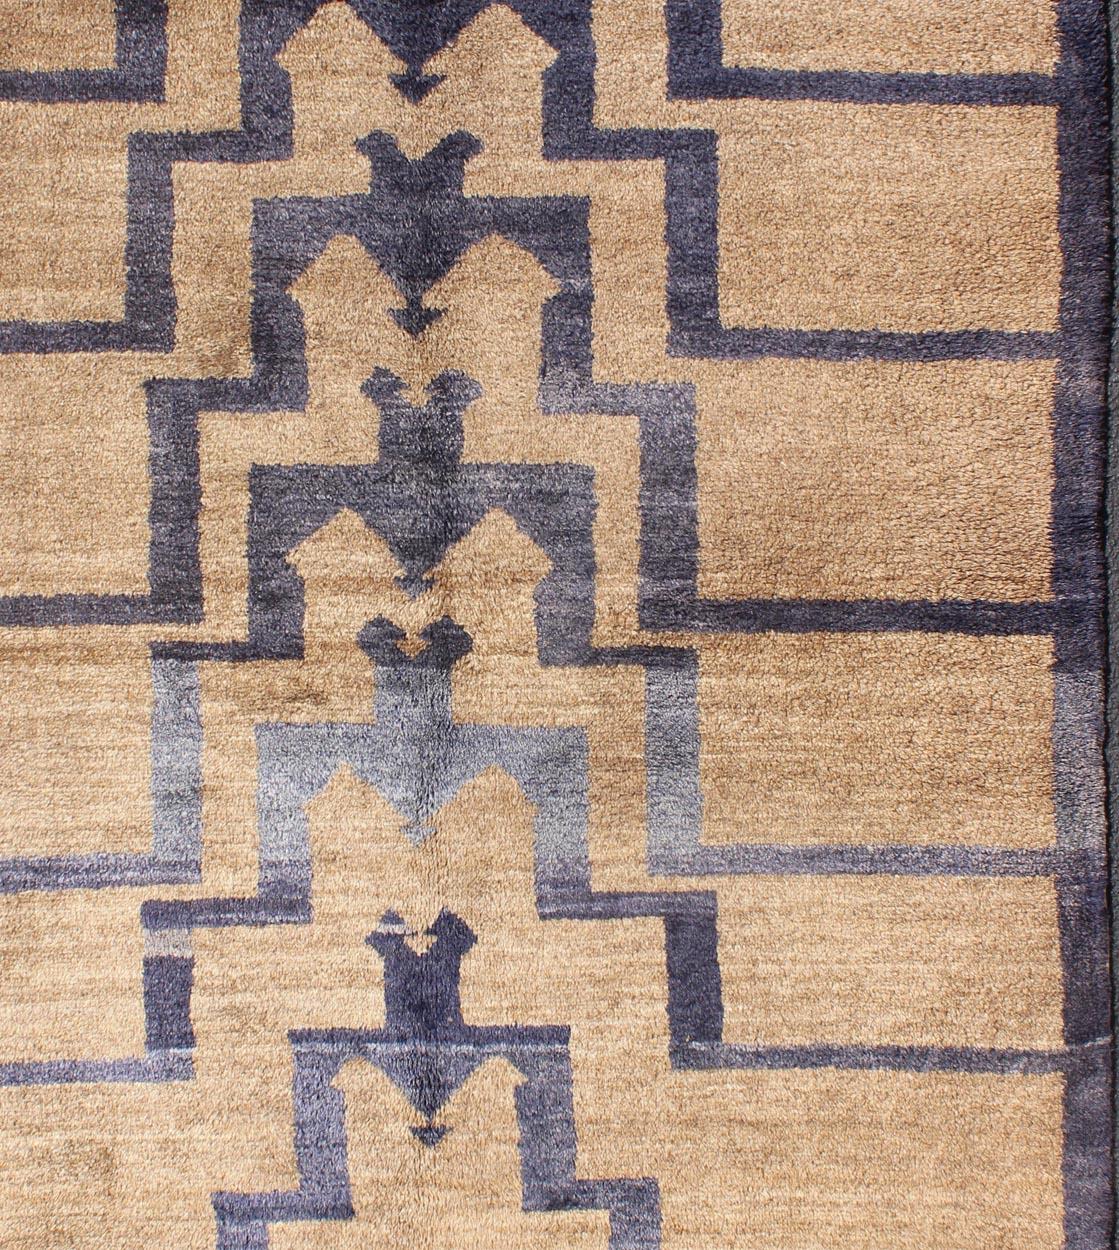 Vintage Turkish Tulu carpet, Rug EN-3306, country of origin / type: Turkey / Tulu circa mid-20th century.

Measures: 4'2 x 4'8.

 